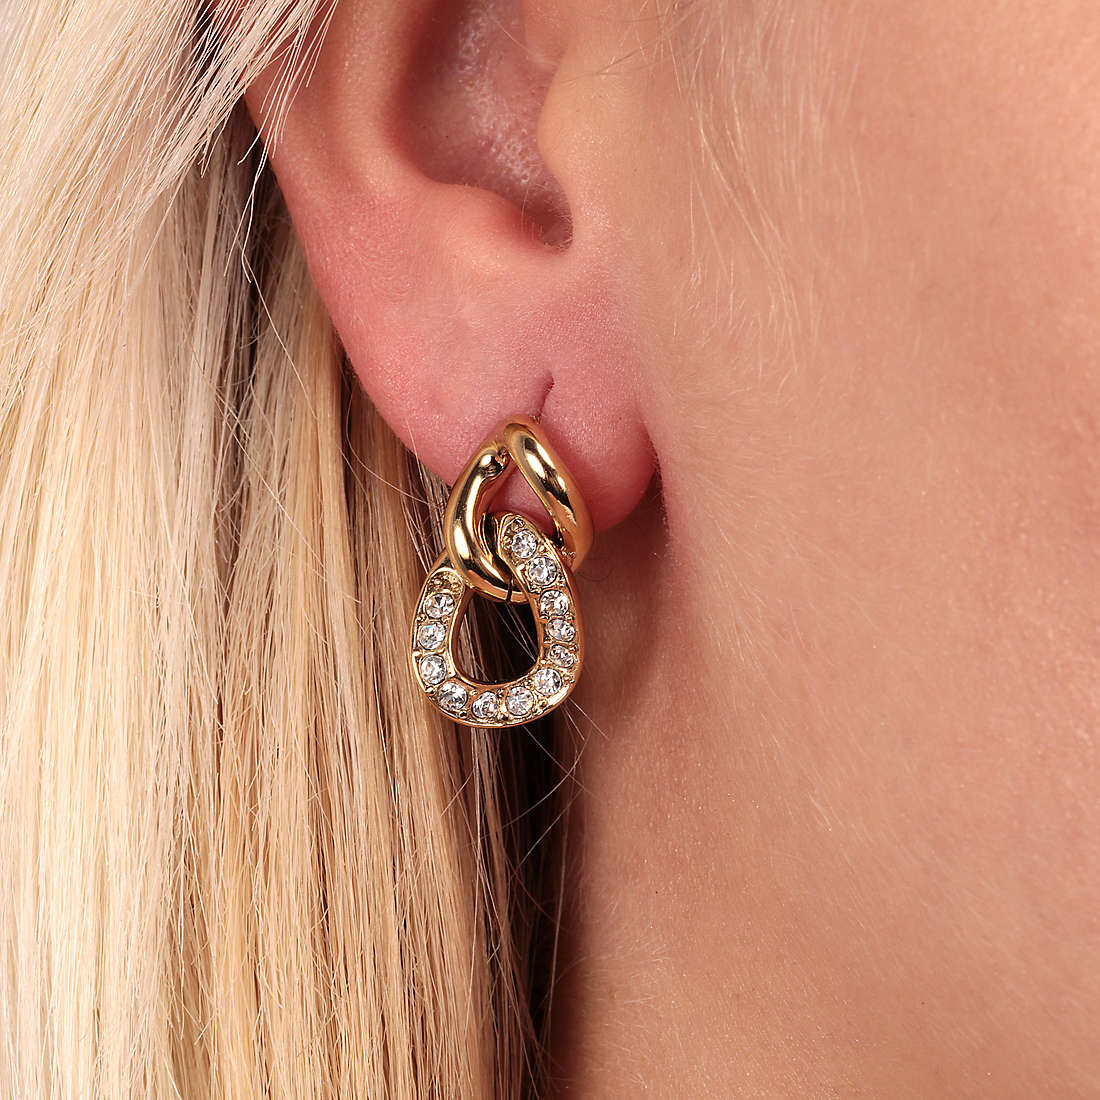 Morellato earrings Unica woman SATS05 wearing